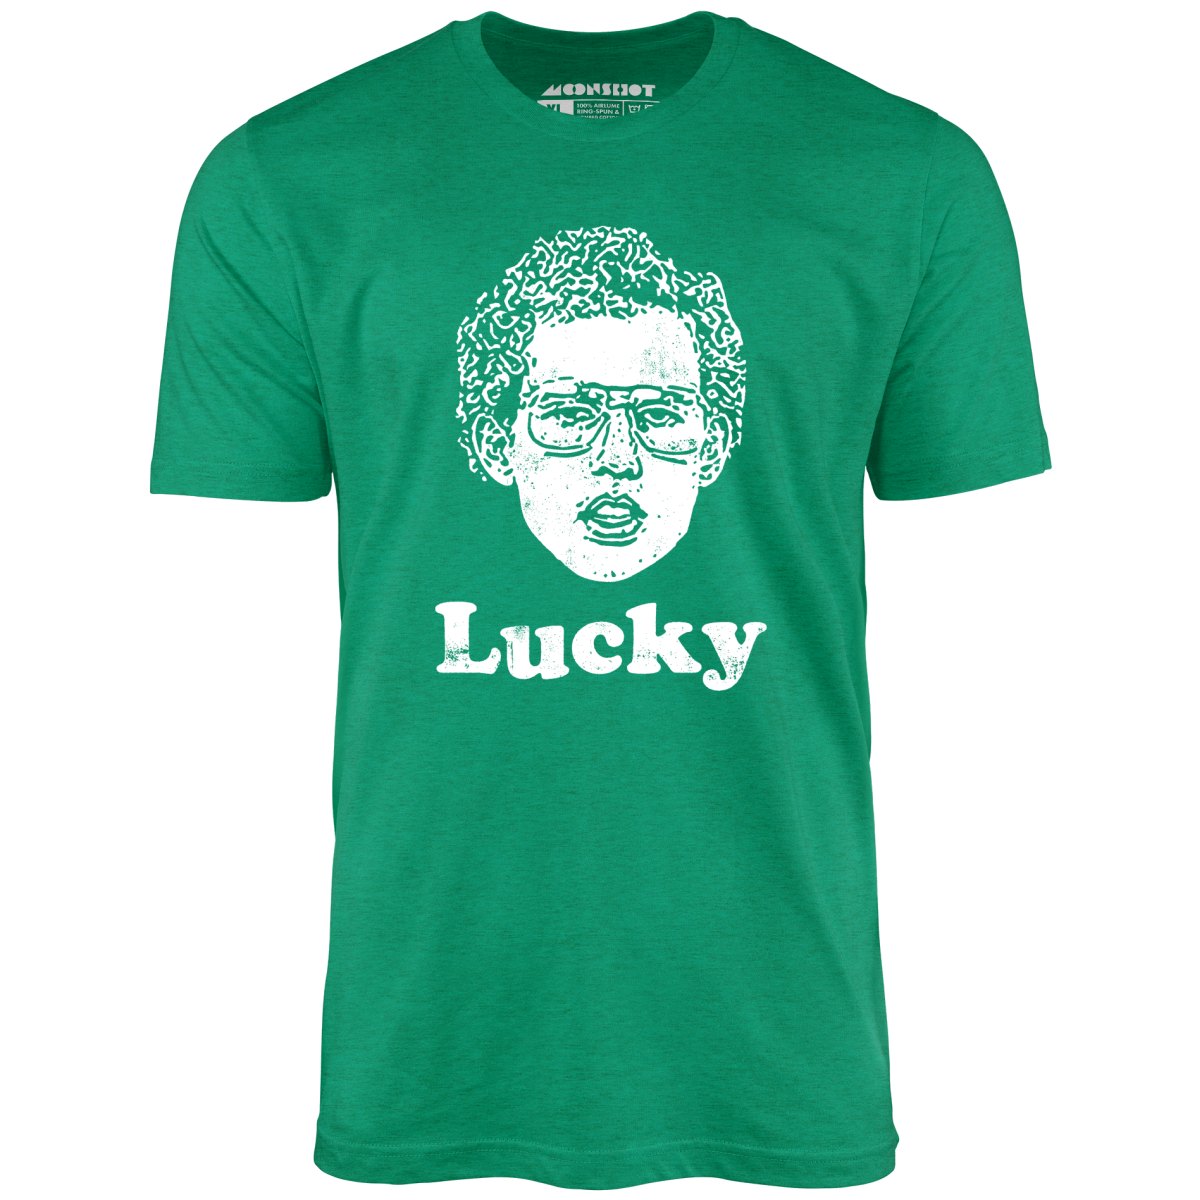 Lucky - Napoleon Dynamite - Unisex T-Shirt